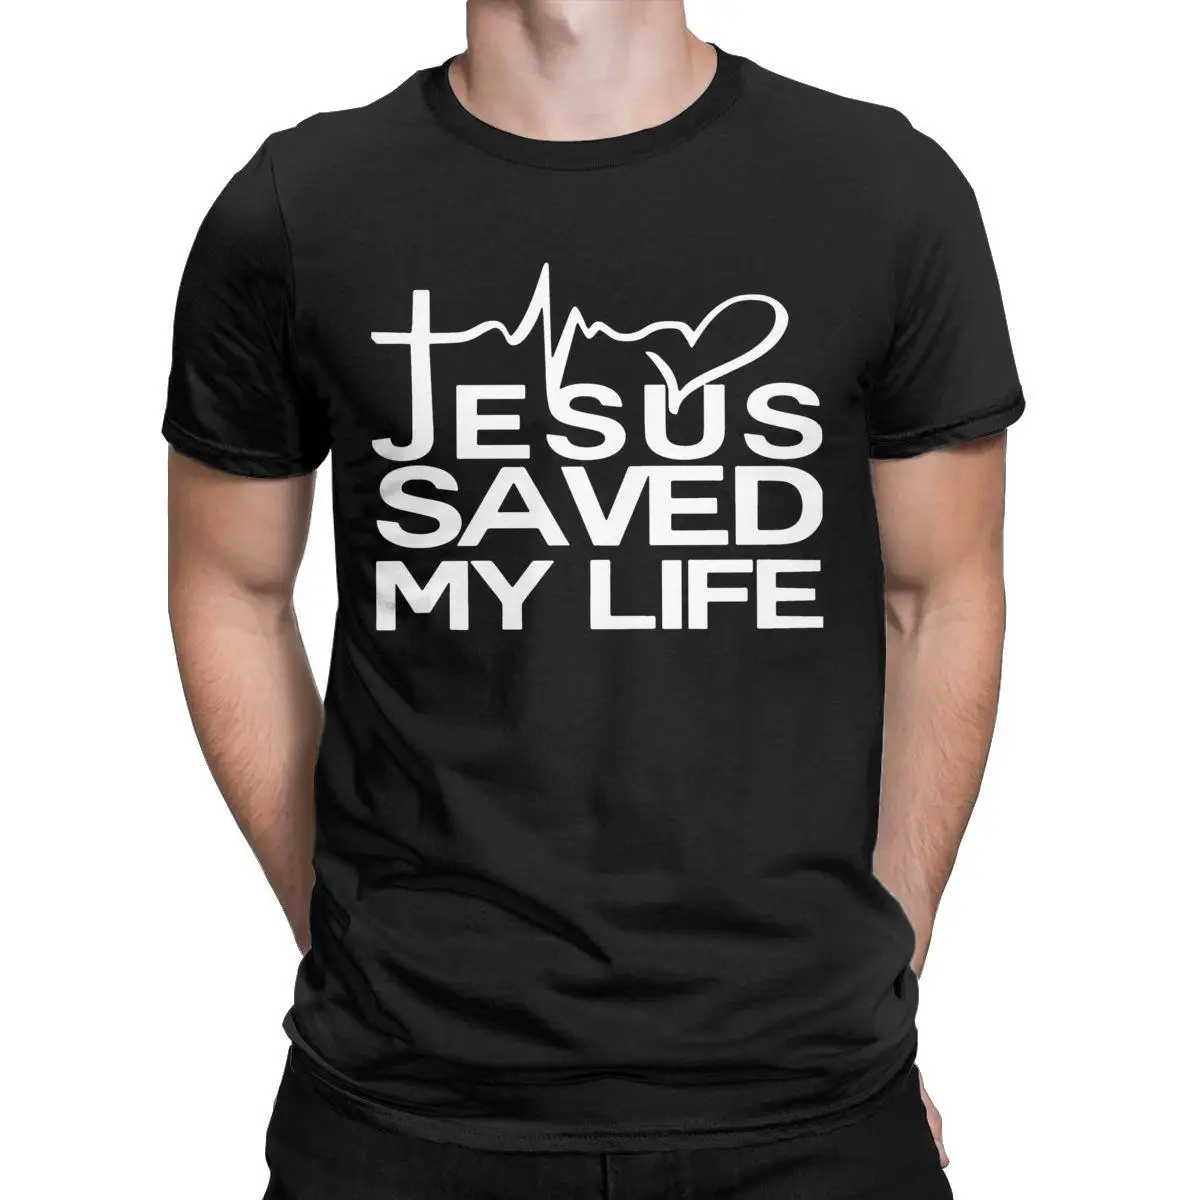 

Men's T-Shirt Jesus Saved My Life Creative Cotton Tee Shirt Short Sleeve T Shirts Crewneck Clothes Plus Size